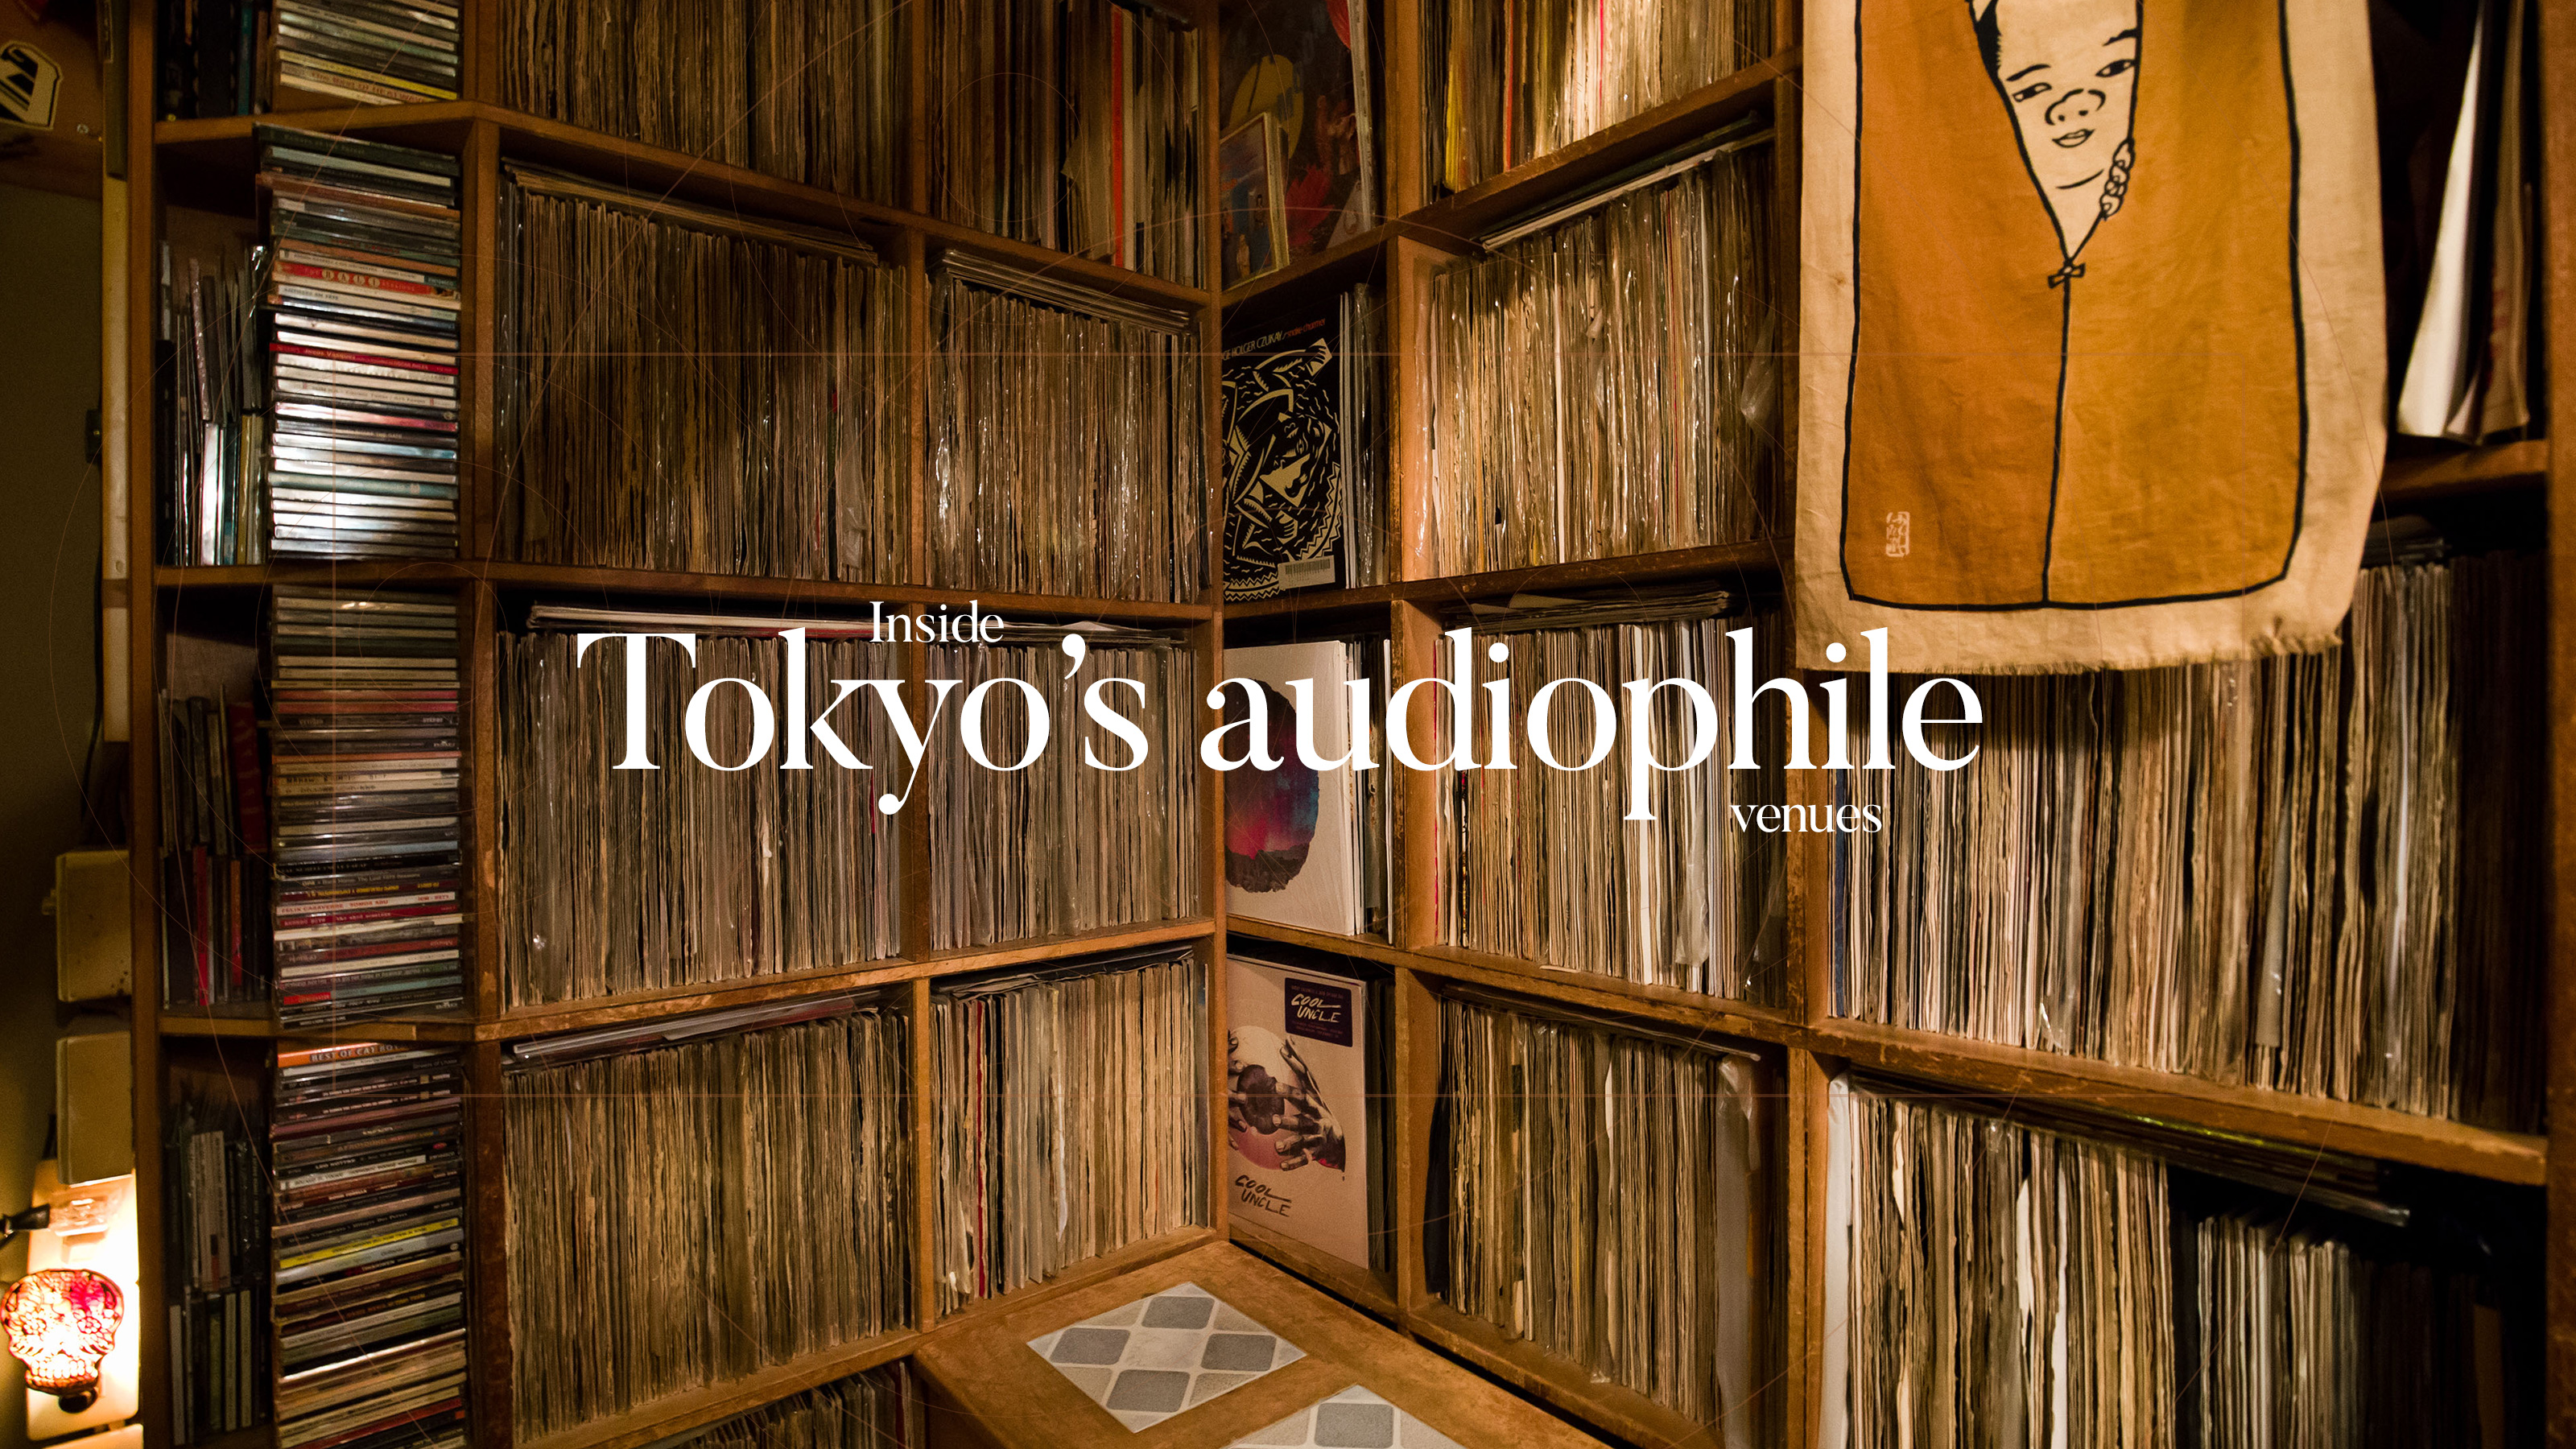 Inside Tokyo's audiophile venues